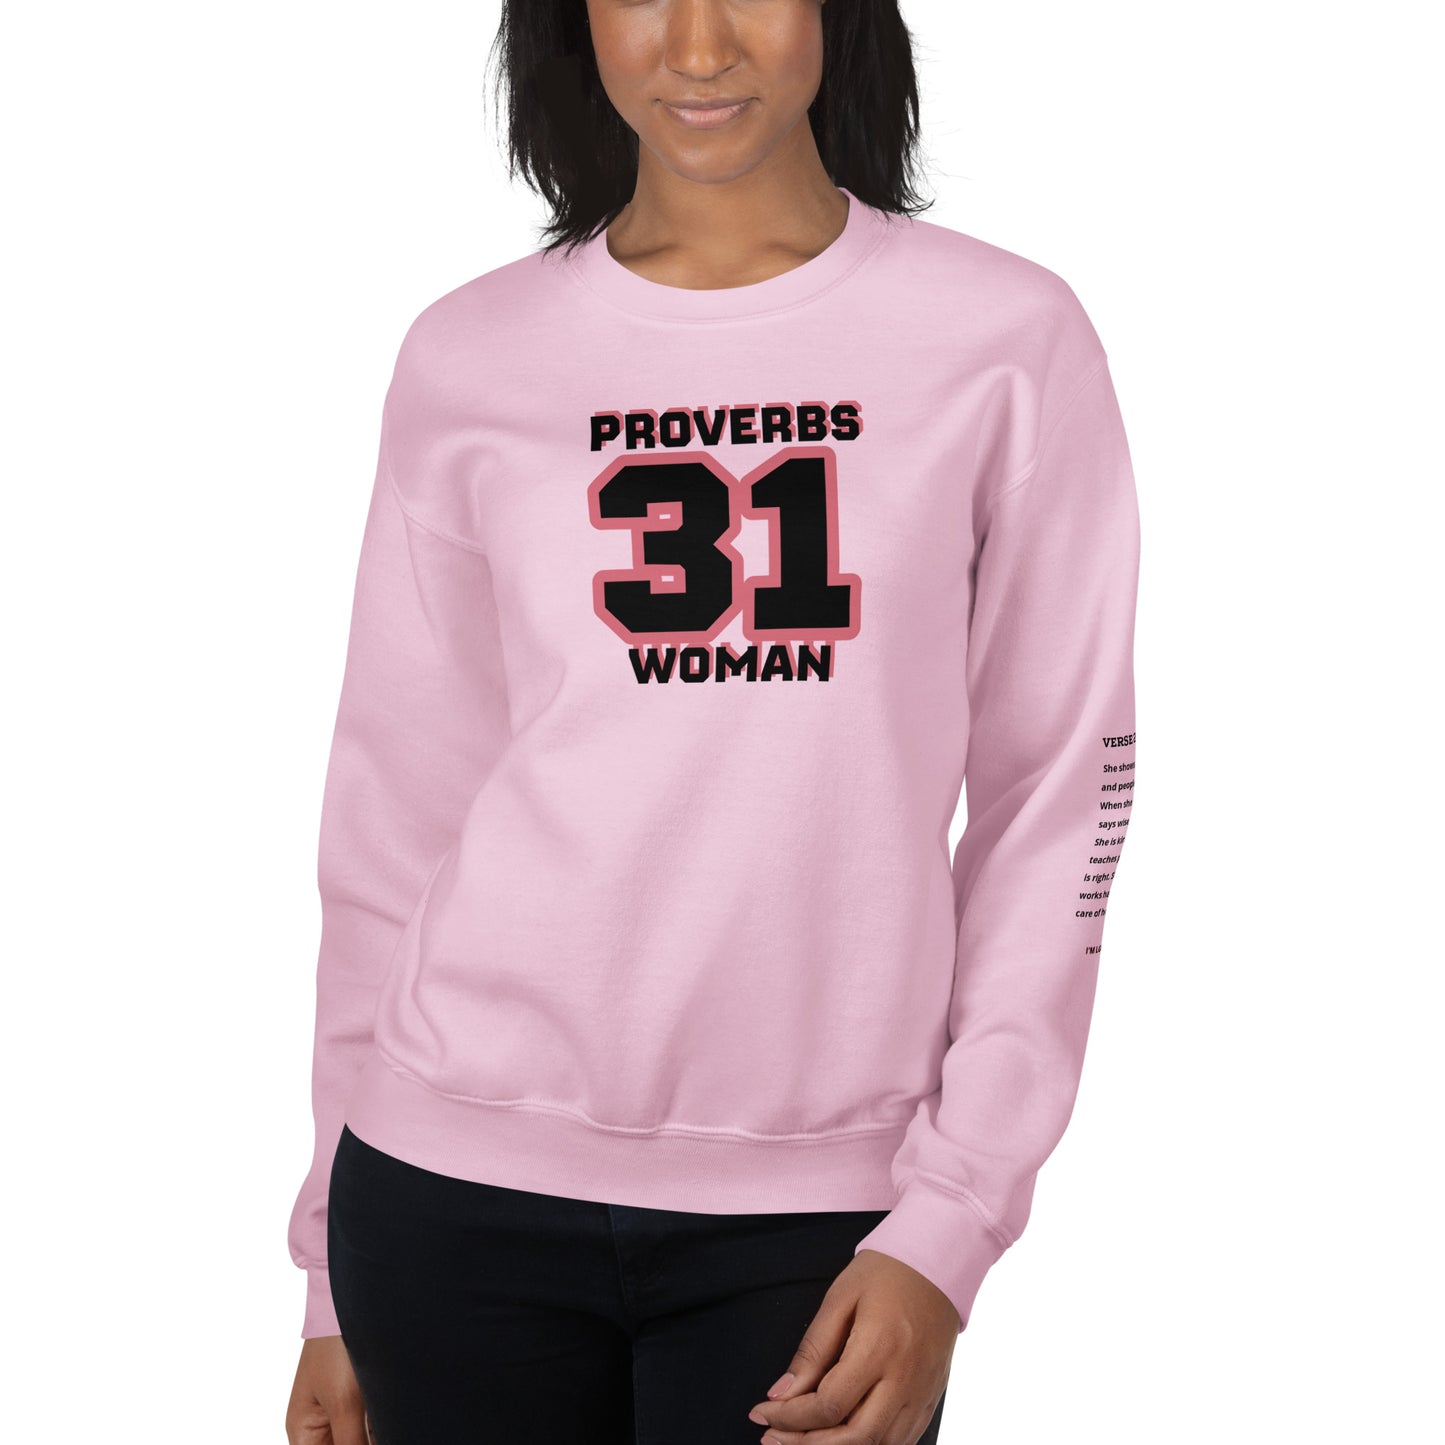 Proverbs 31 Woman Unisex Sweatshirt - S - Shirts & Tops